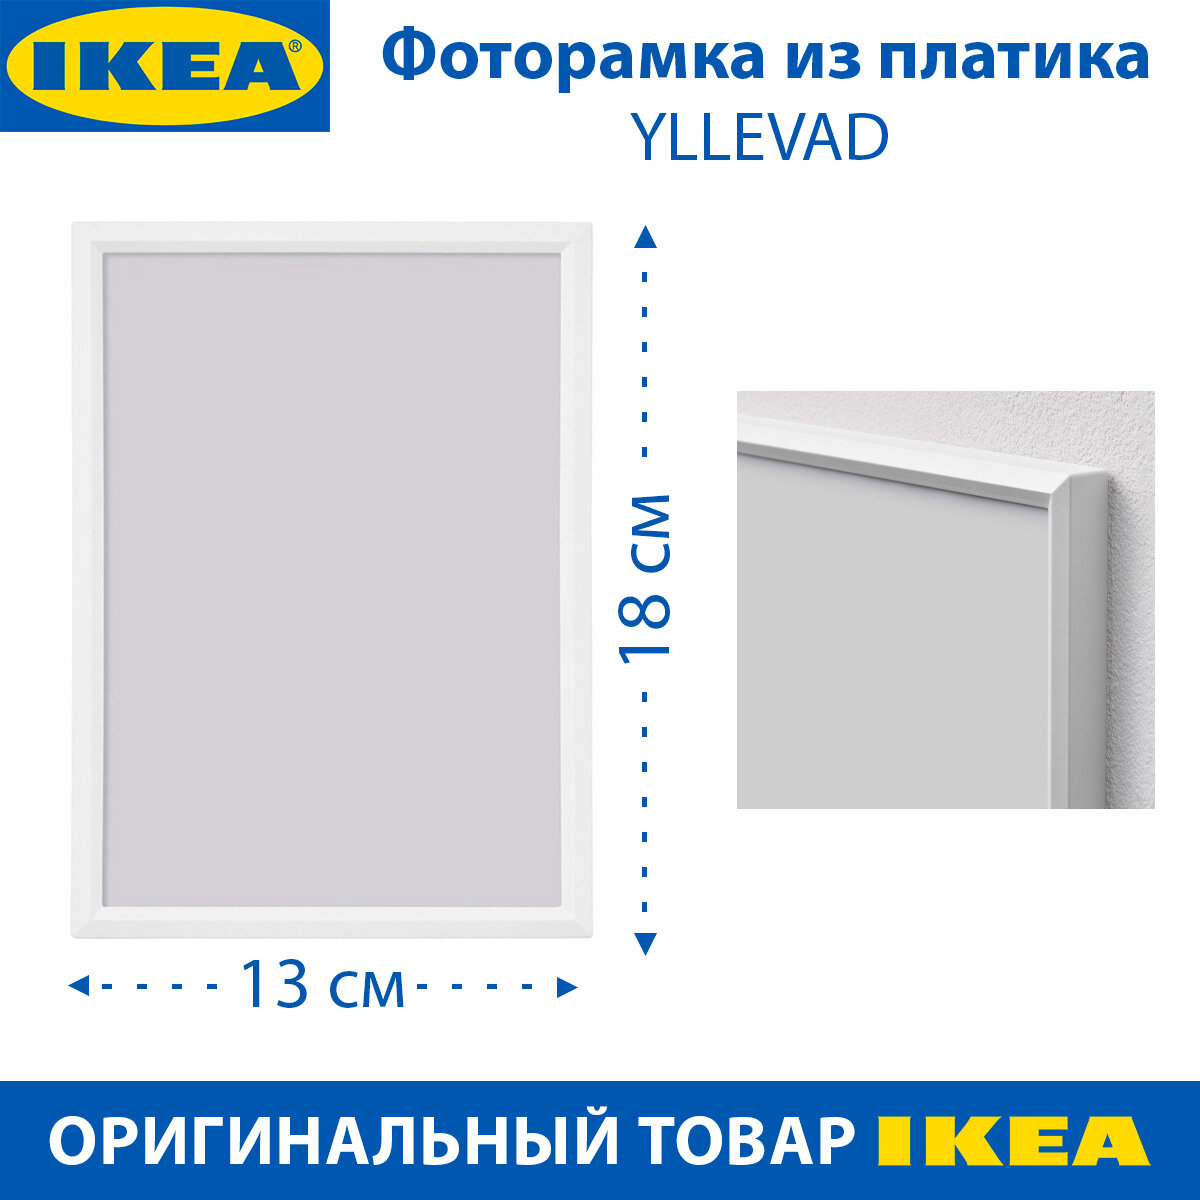 Фоторамка IKEA - YLLEVAD (иллевад), пластиковая, белая, 13х18 см, 1 шт